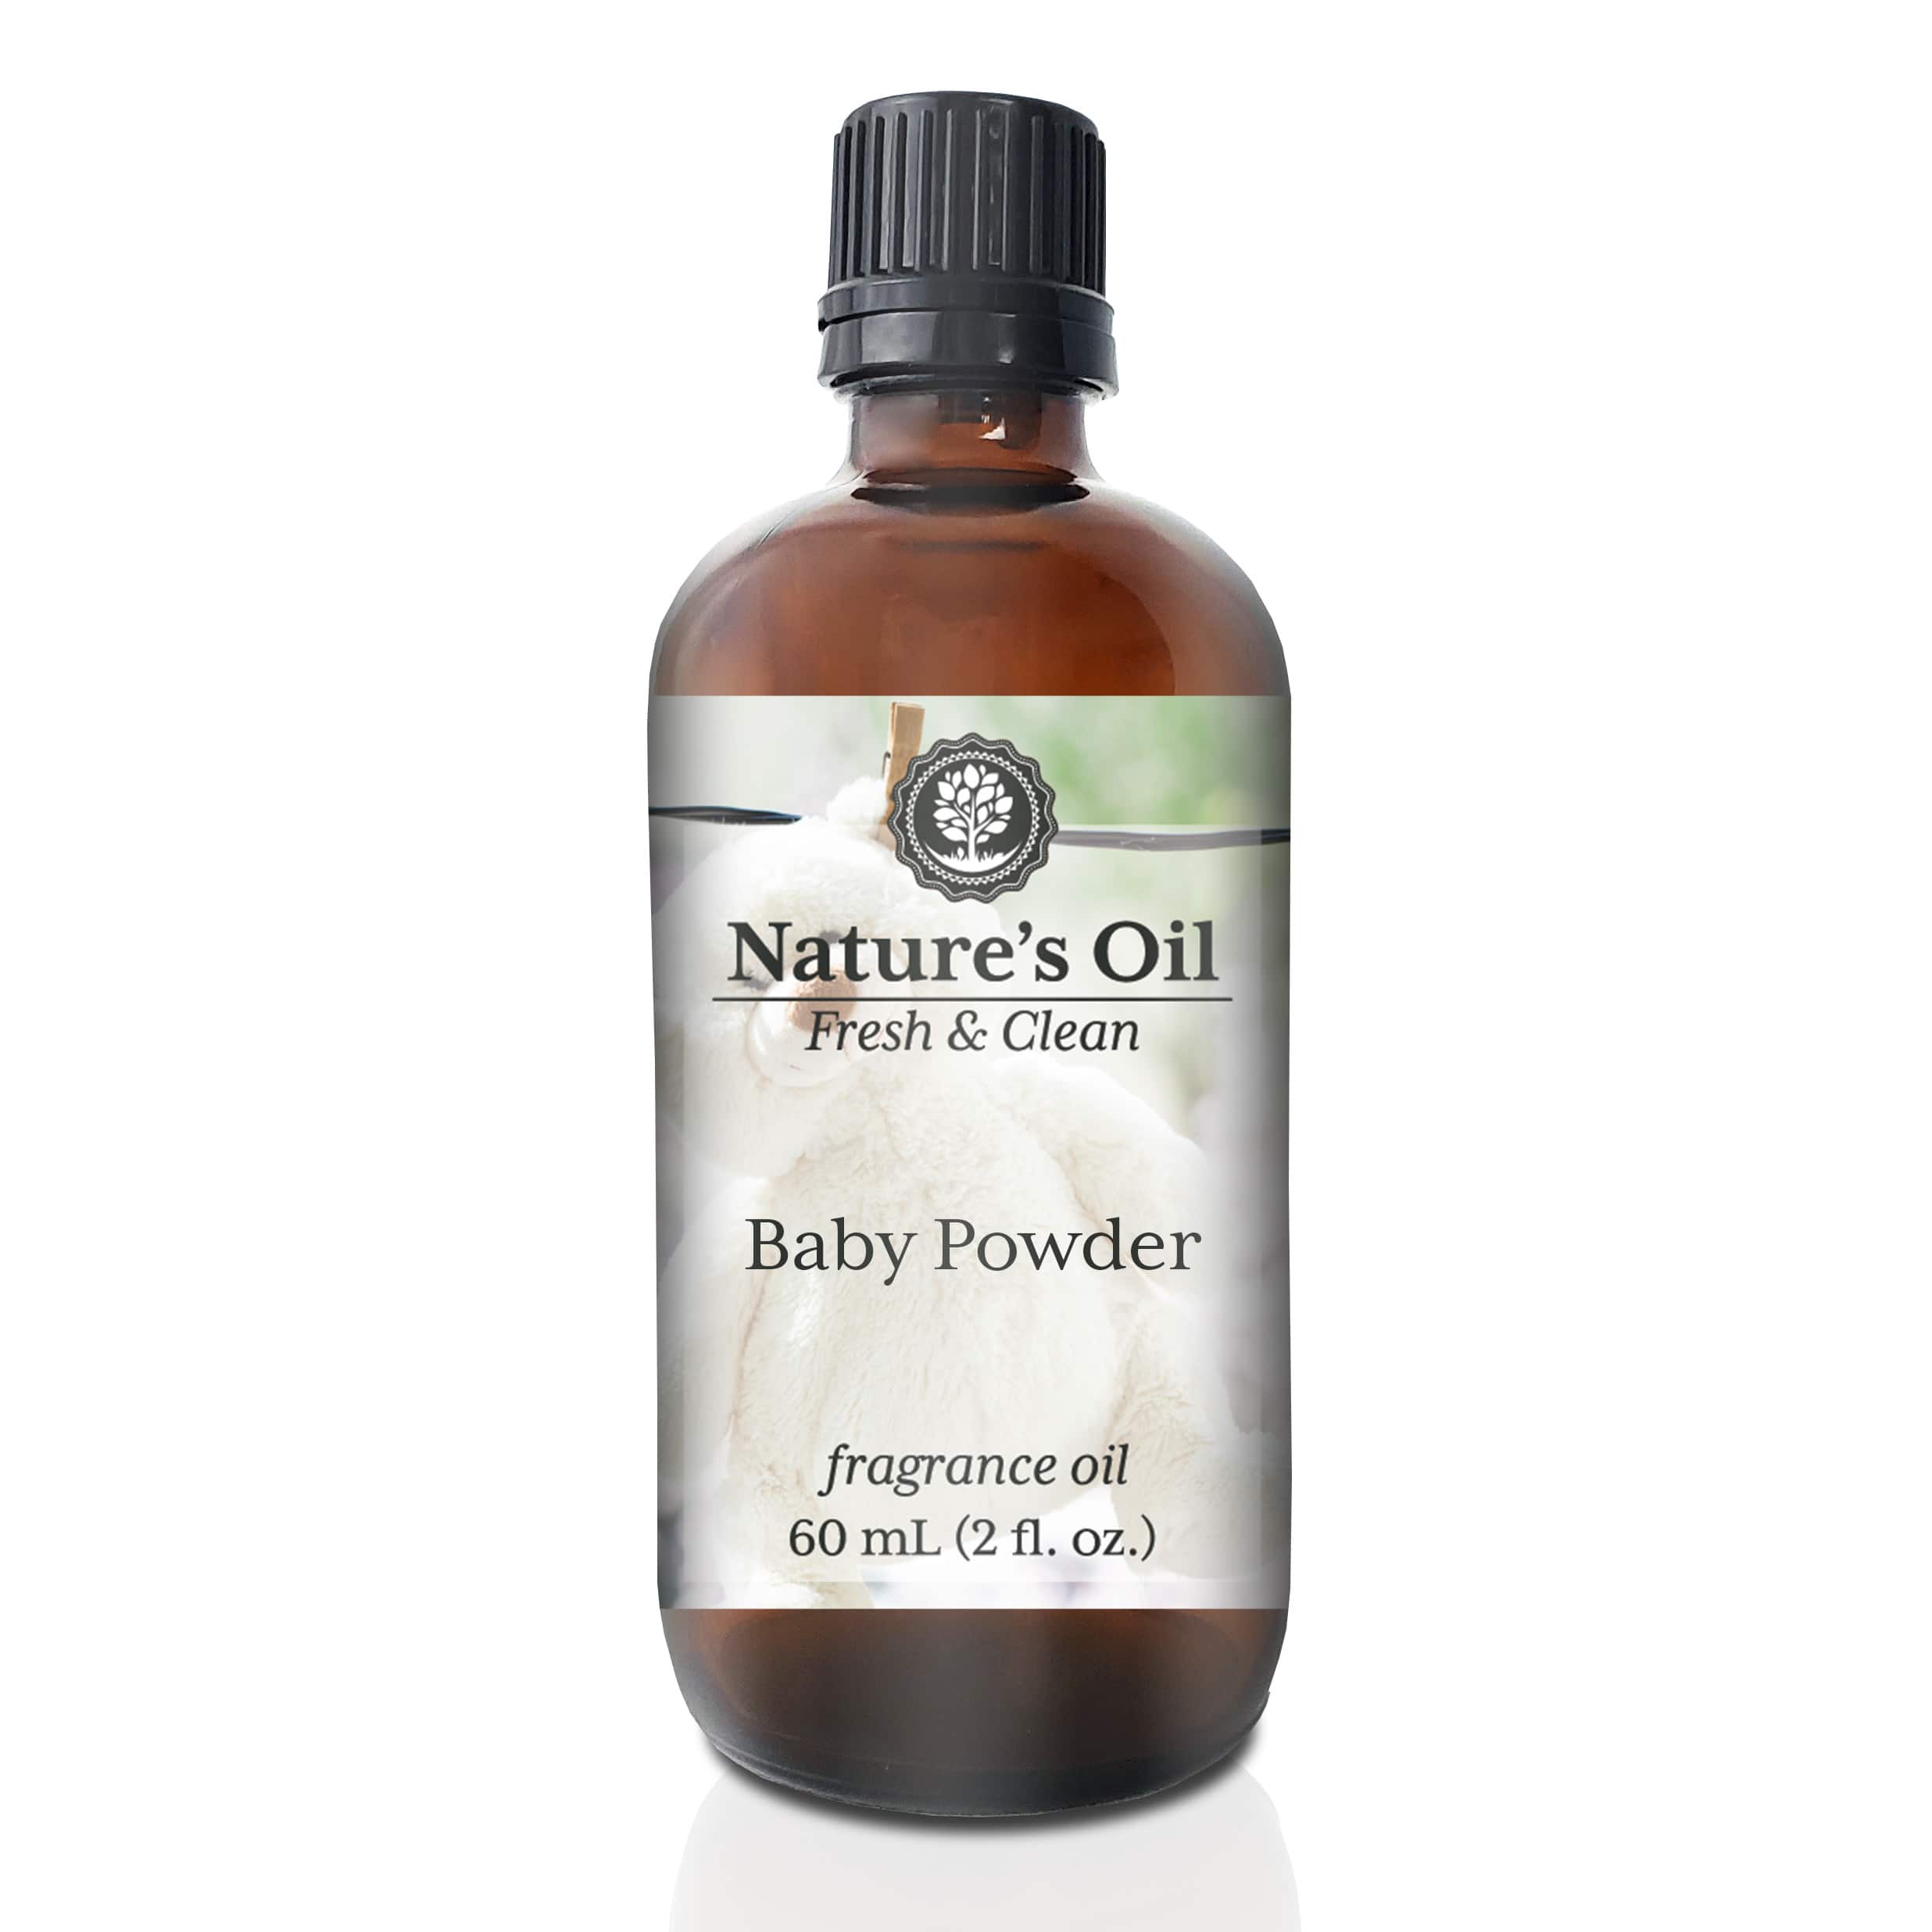 Nature's Oil Baby Powder Fragrance Oil